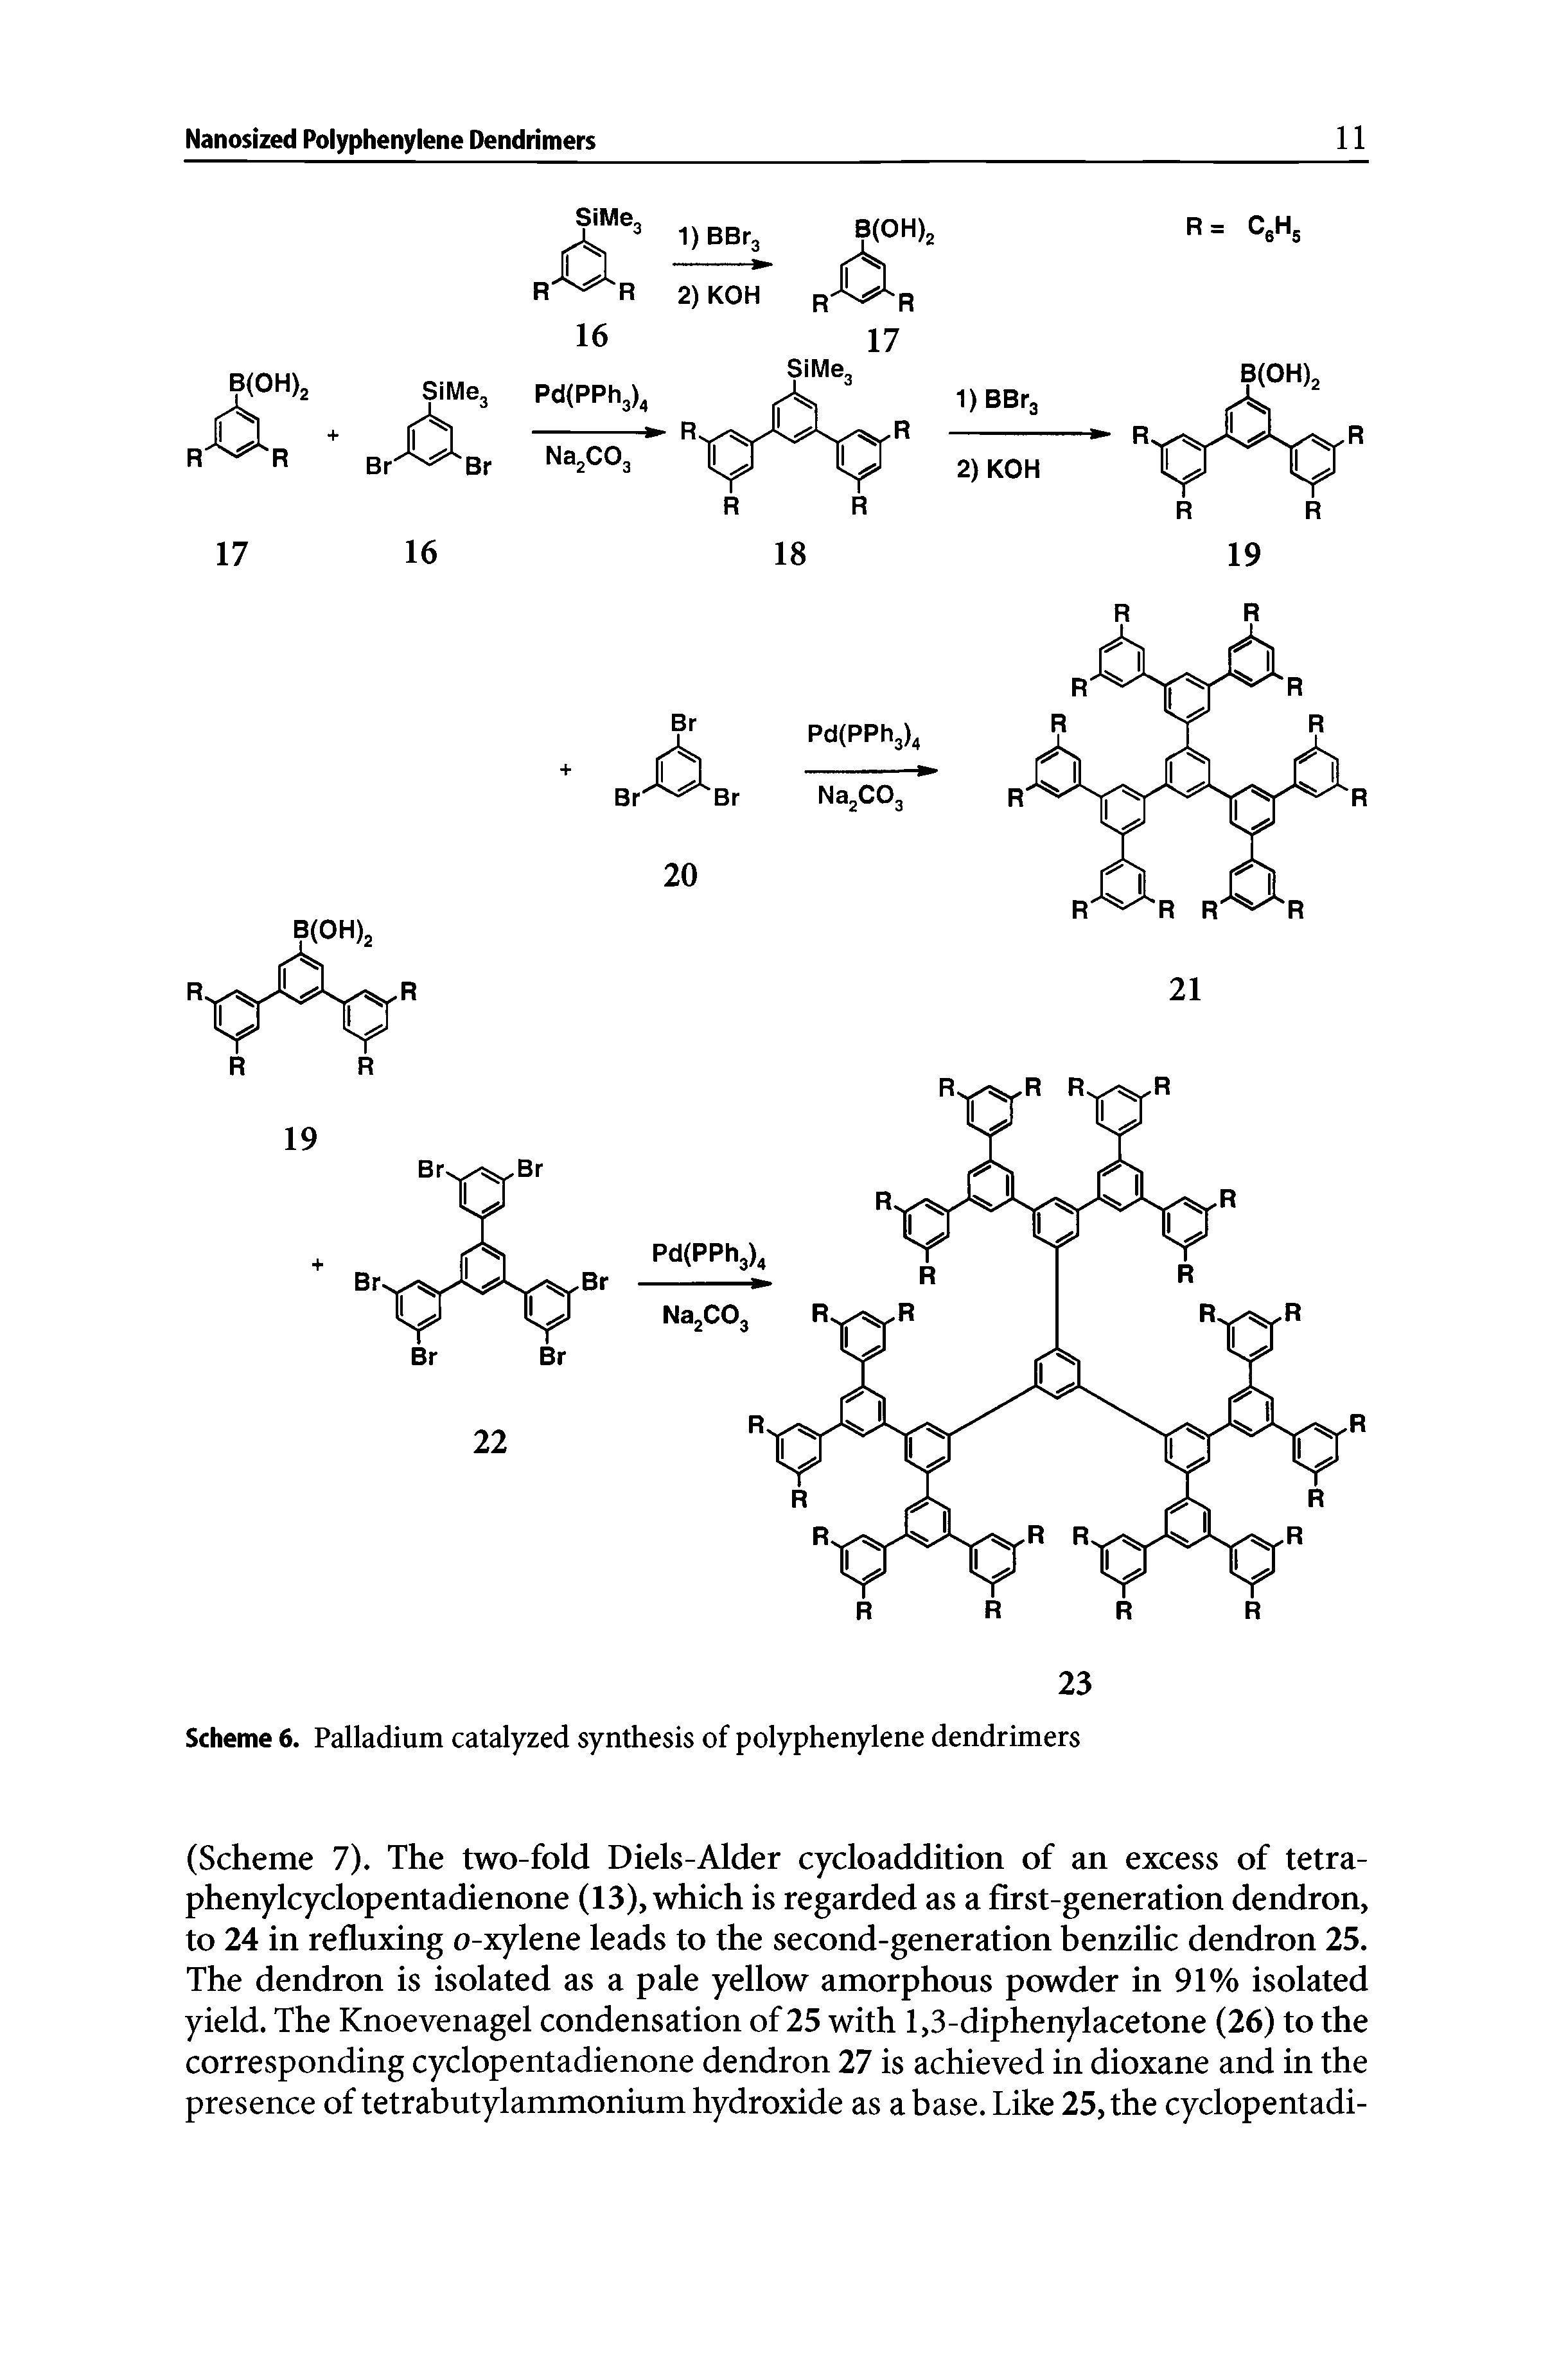 Scheme 6. Palladium catalyzed synthesis of polyphenylene dendrimers...